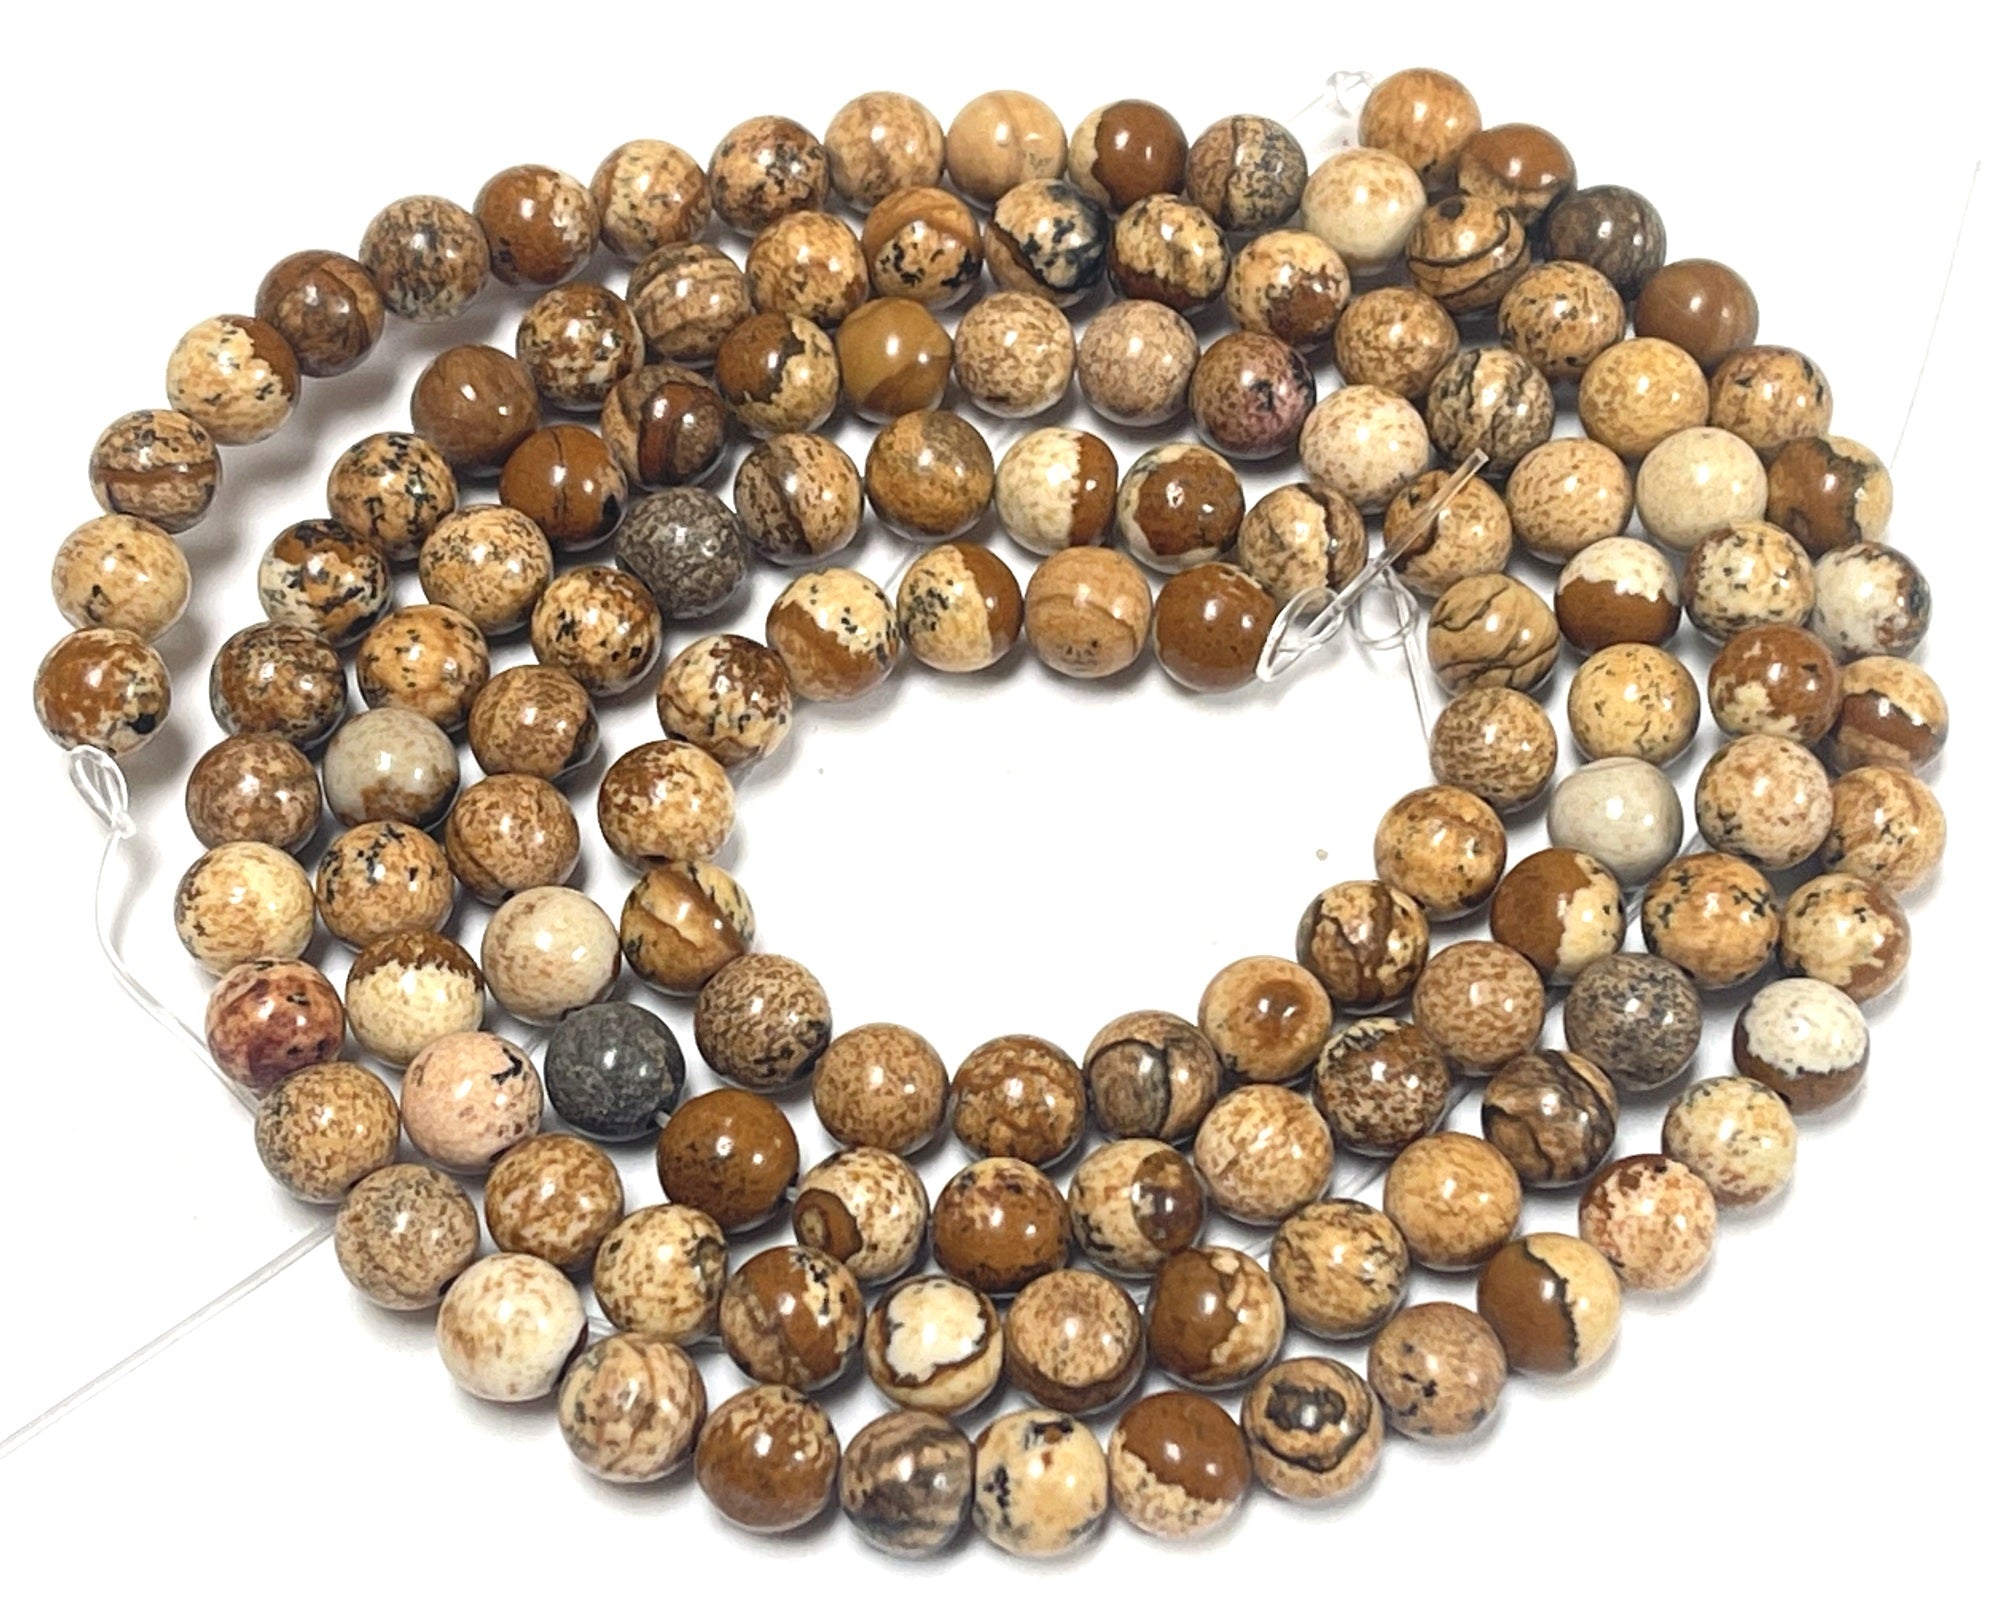 Picture Jasper polished 6mm round gemstone beads 15" strand - Oz Beads 